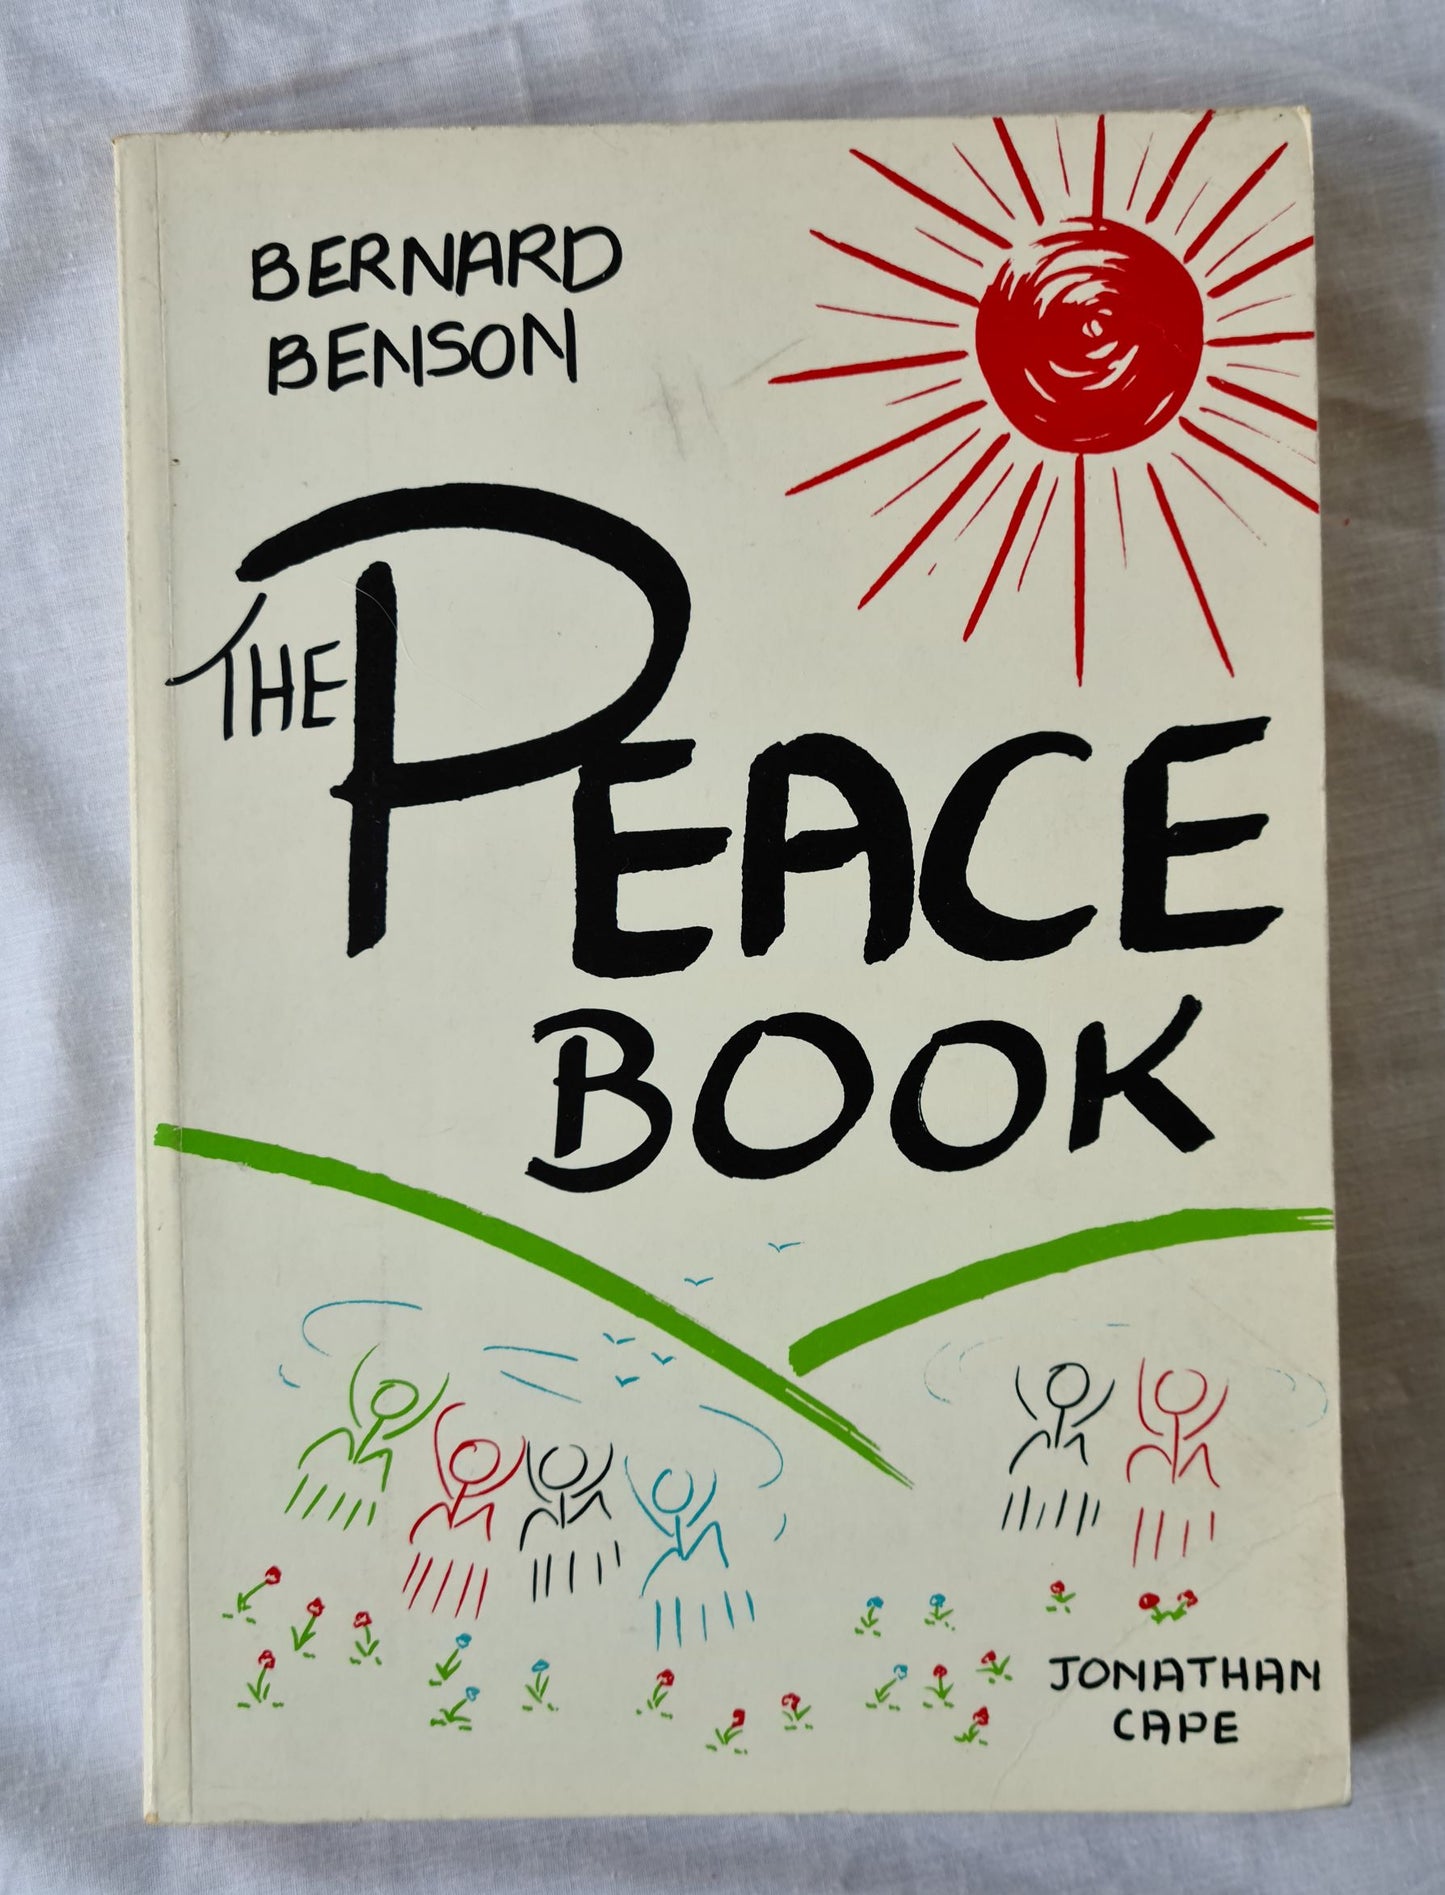 The Peace Book  by Bernard Benson